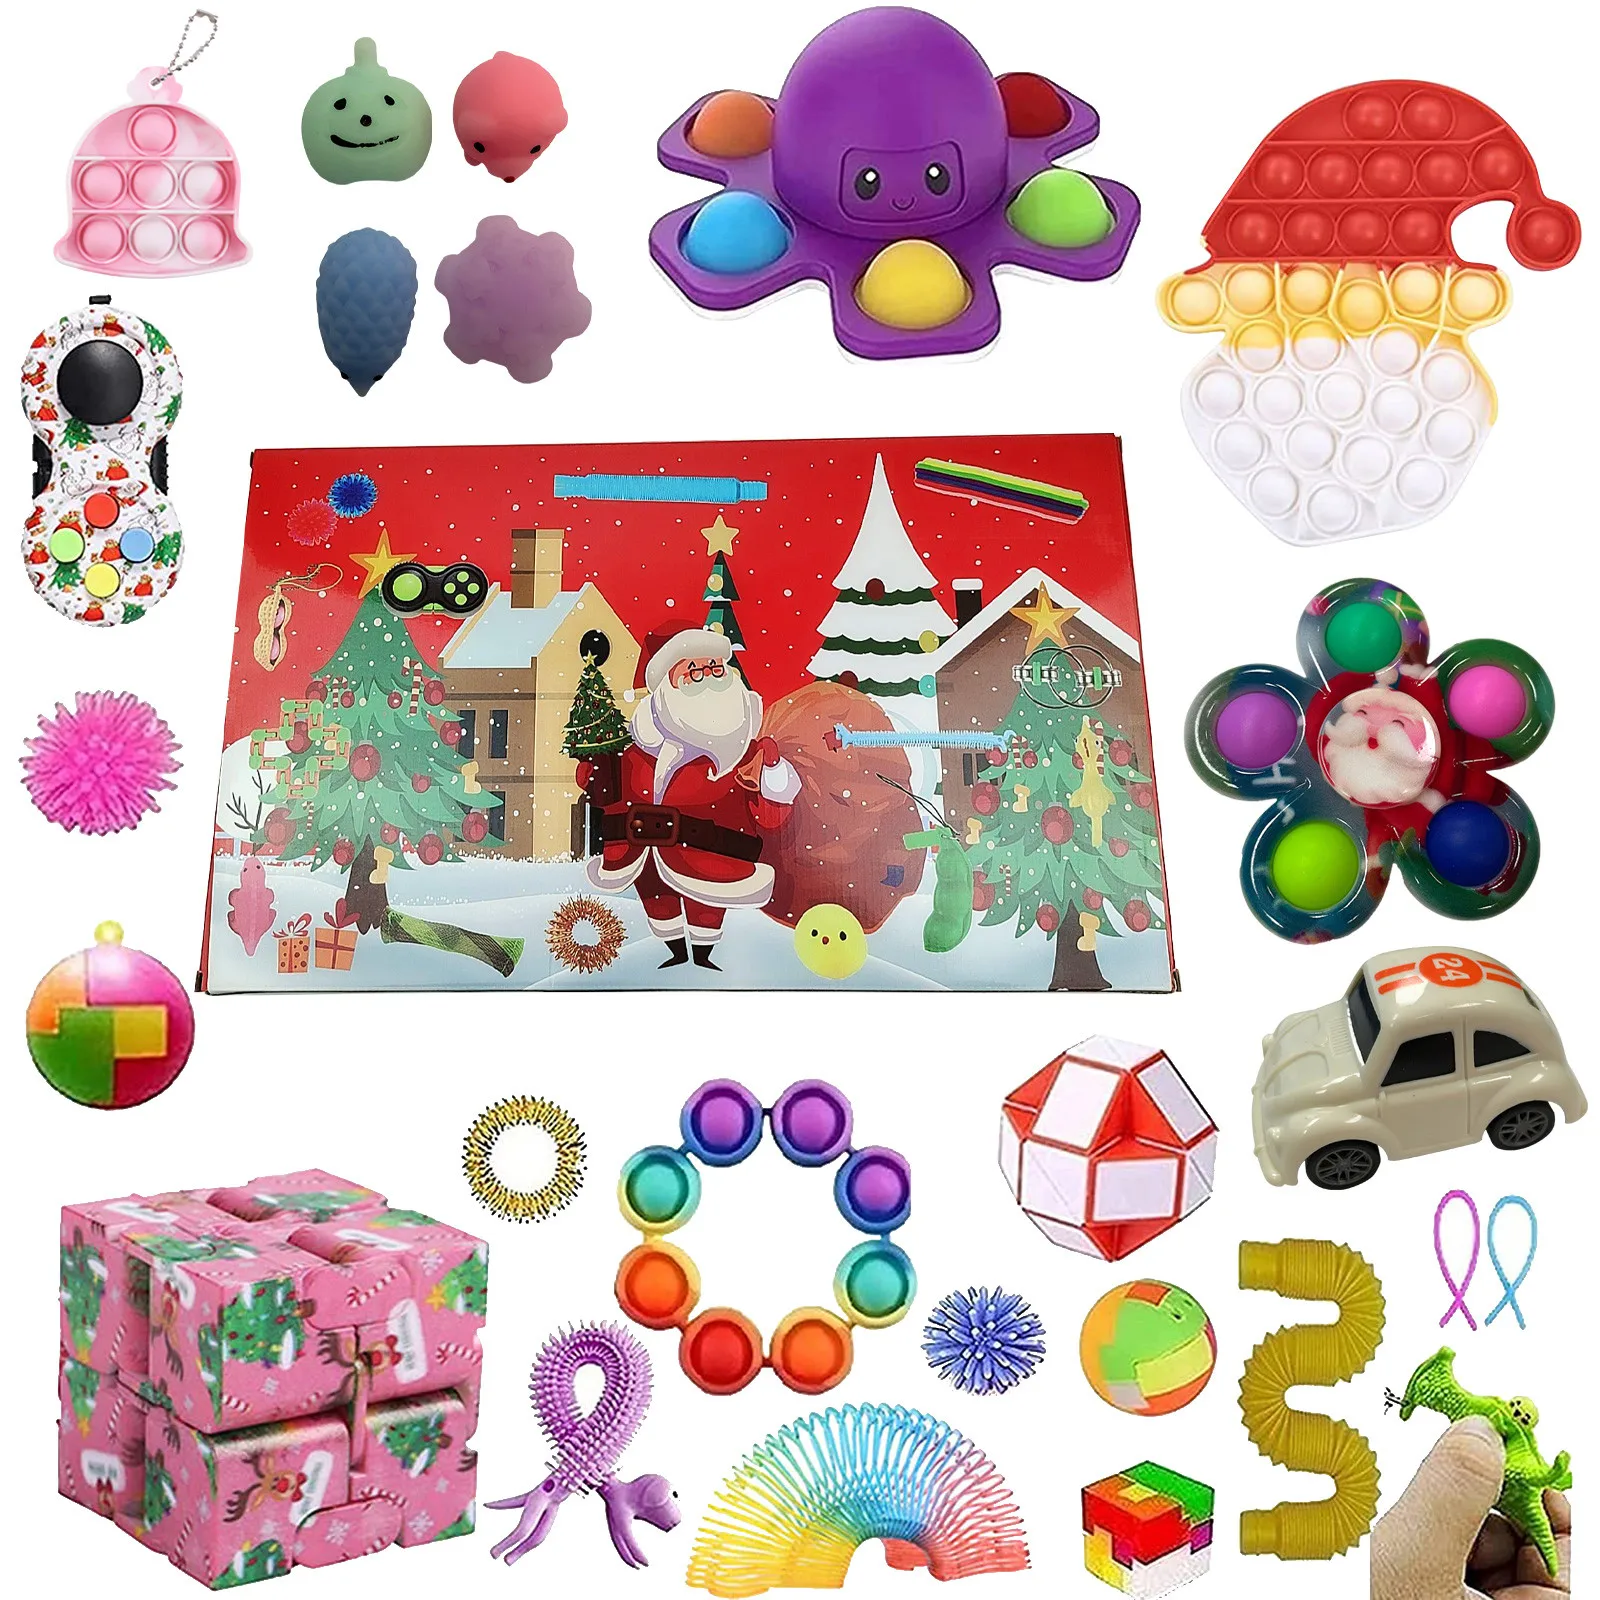 

24pcs Fidget Toys Pack Antistress Simple Dimple Toys Set Mystery Box 2022 Advent Calanders Surprise Christmas Gift Box for kids